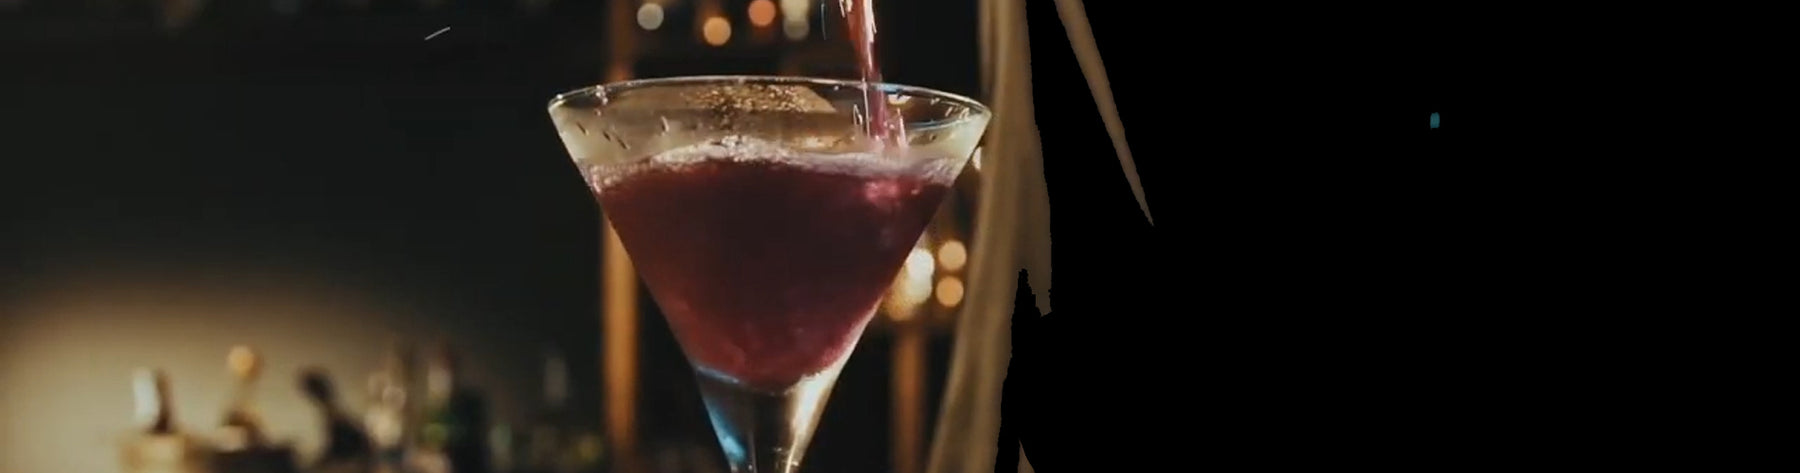 Martini Cocktail With Fonseca Bin 27 Port